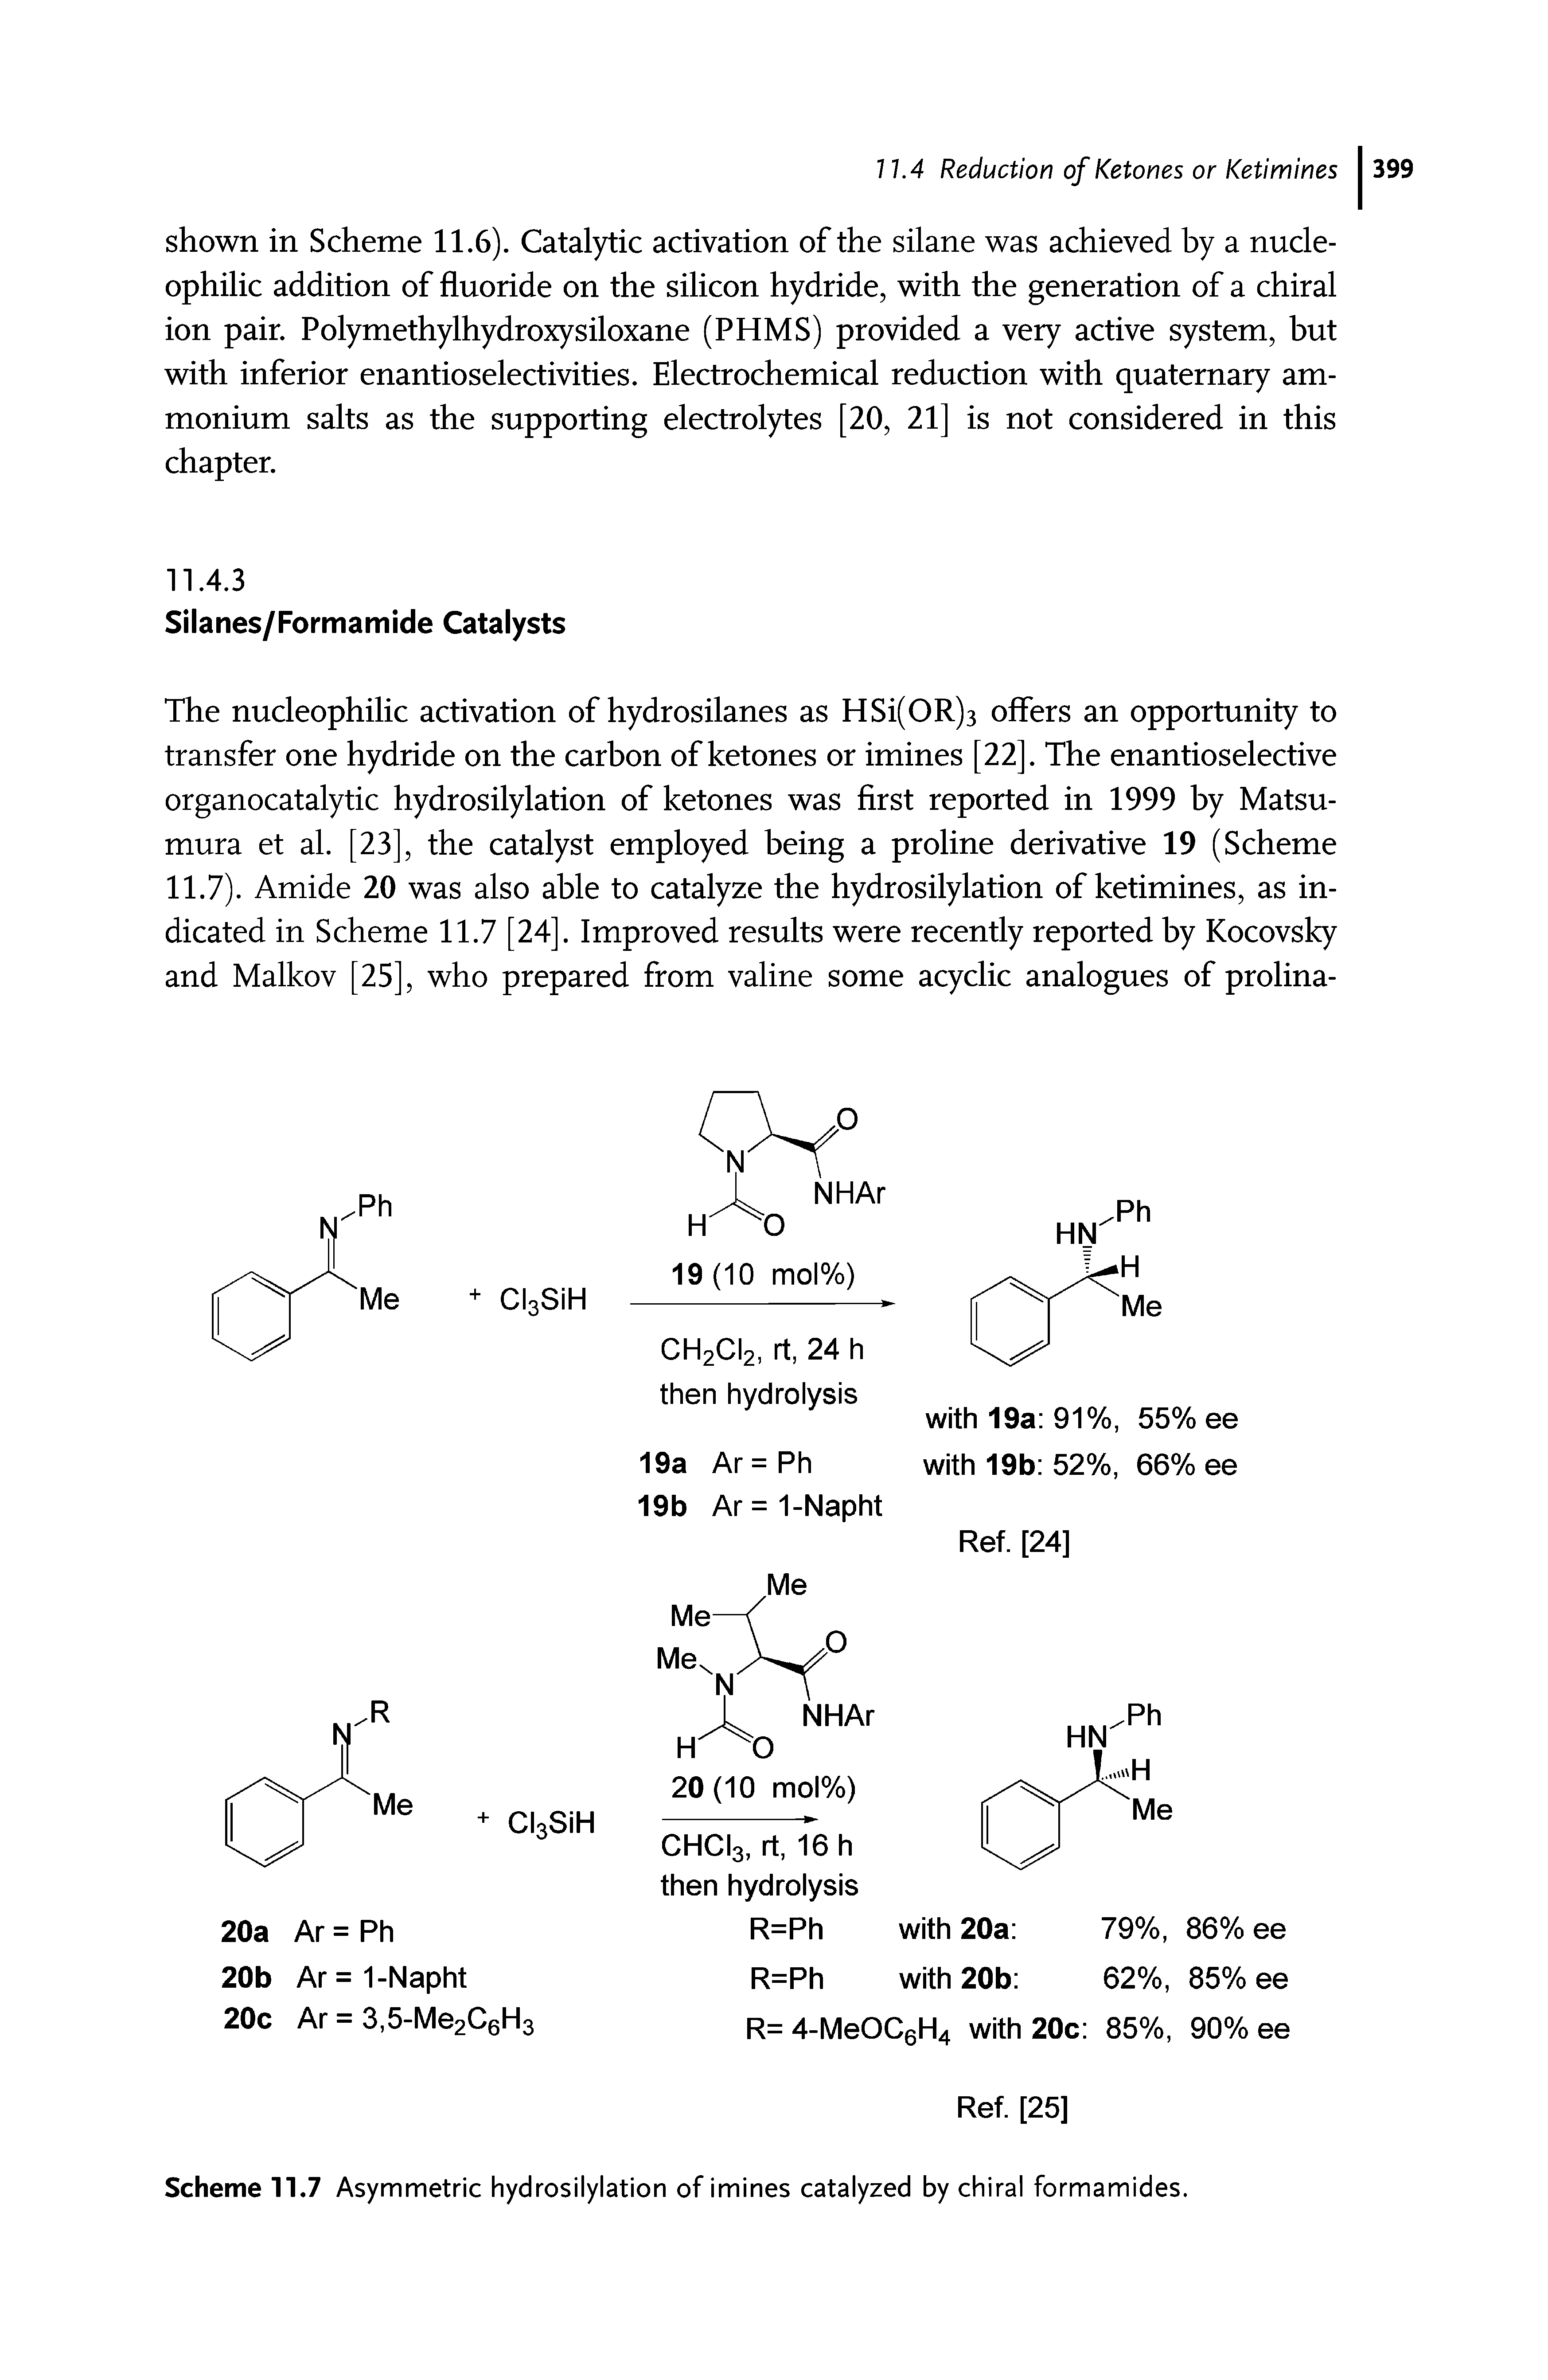 Scheme 11.7 Asymmetric hydrosilylation of imines catalyzed by chiral formamides.